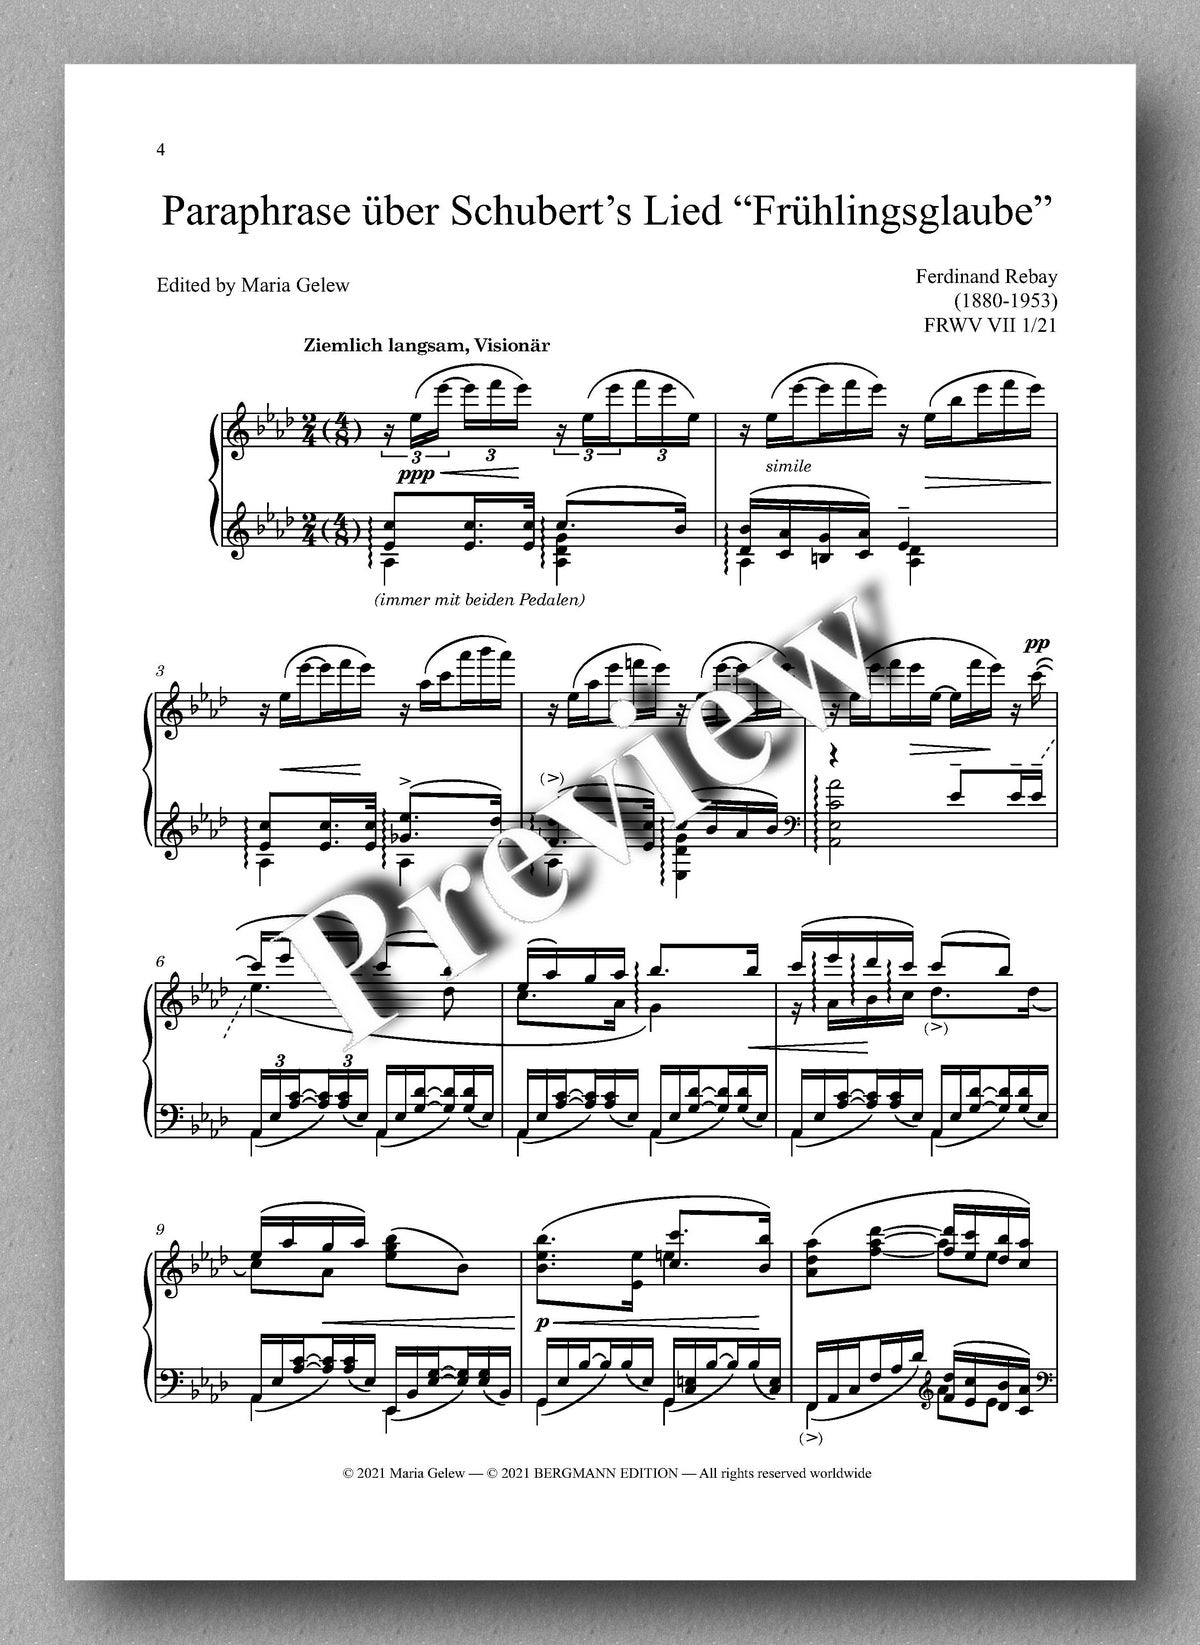 Rebay, Klavier No. 9, Paraphrase über Schubert’s Lied “Frühlingsglaube” - music score 1